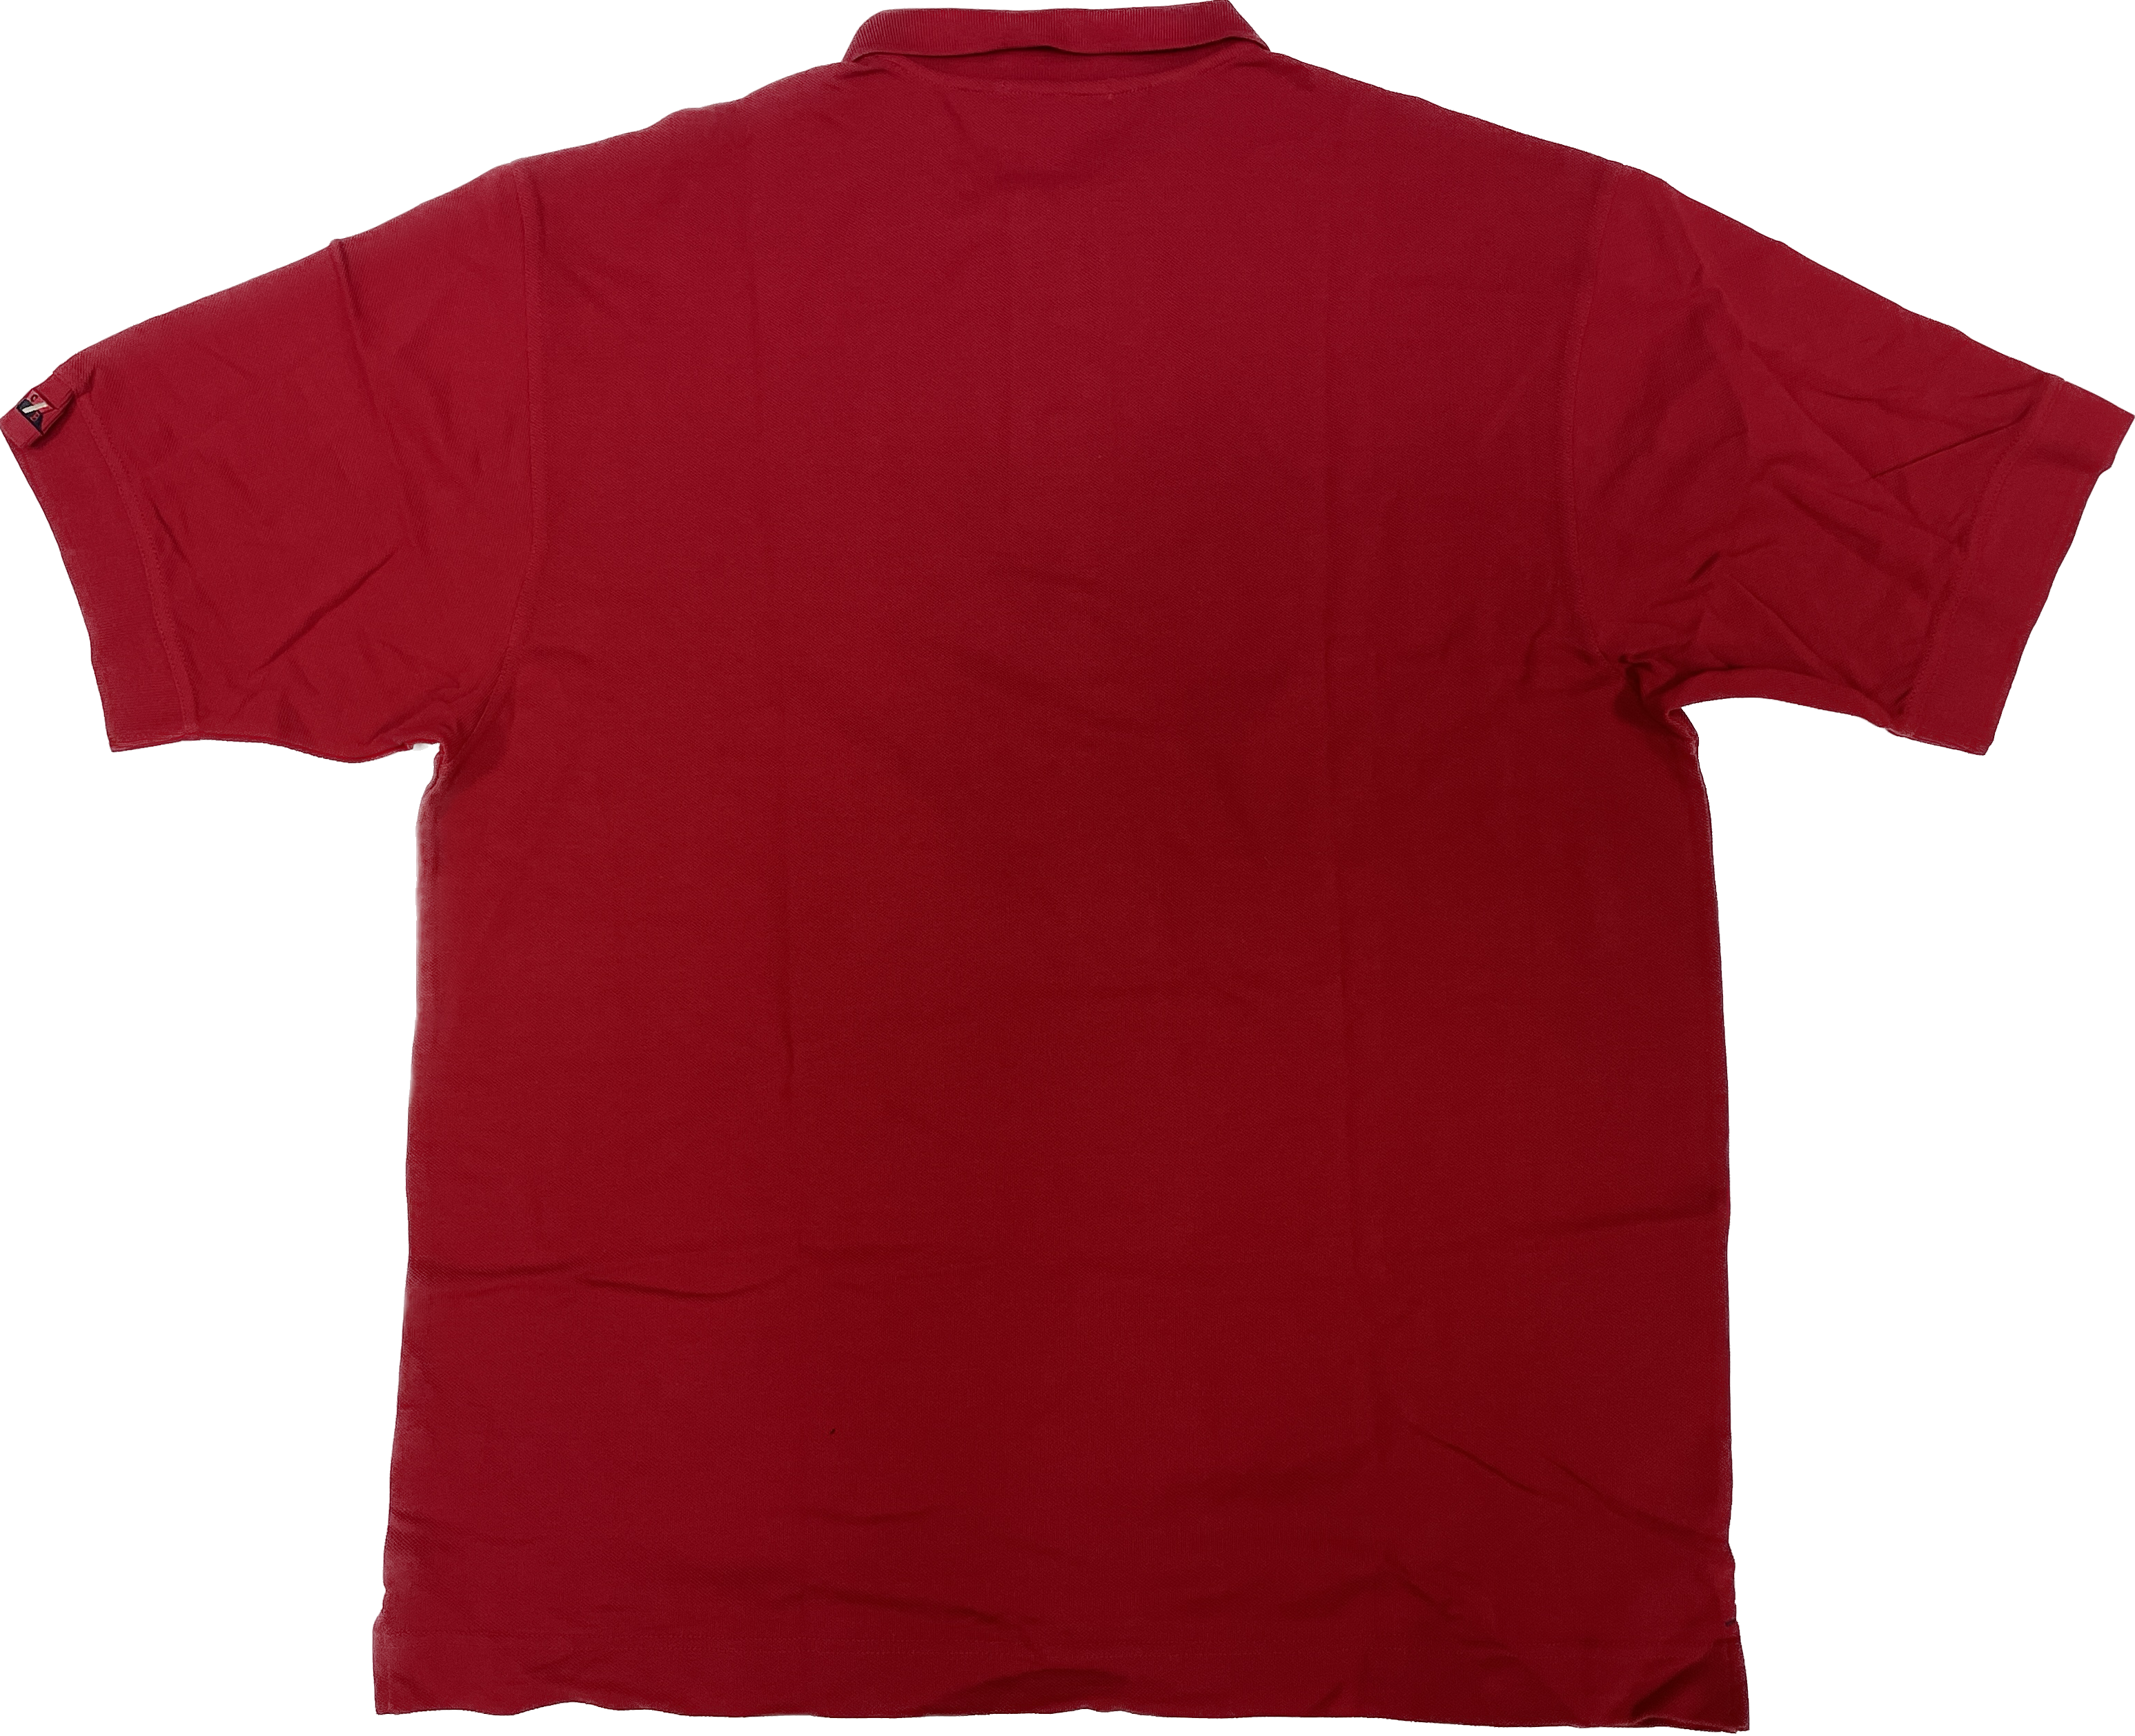 Men's Red Short Sleeve Polo Shirt